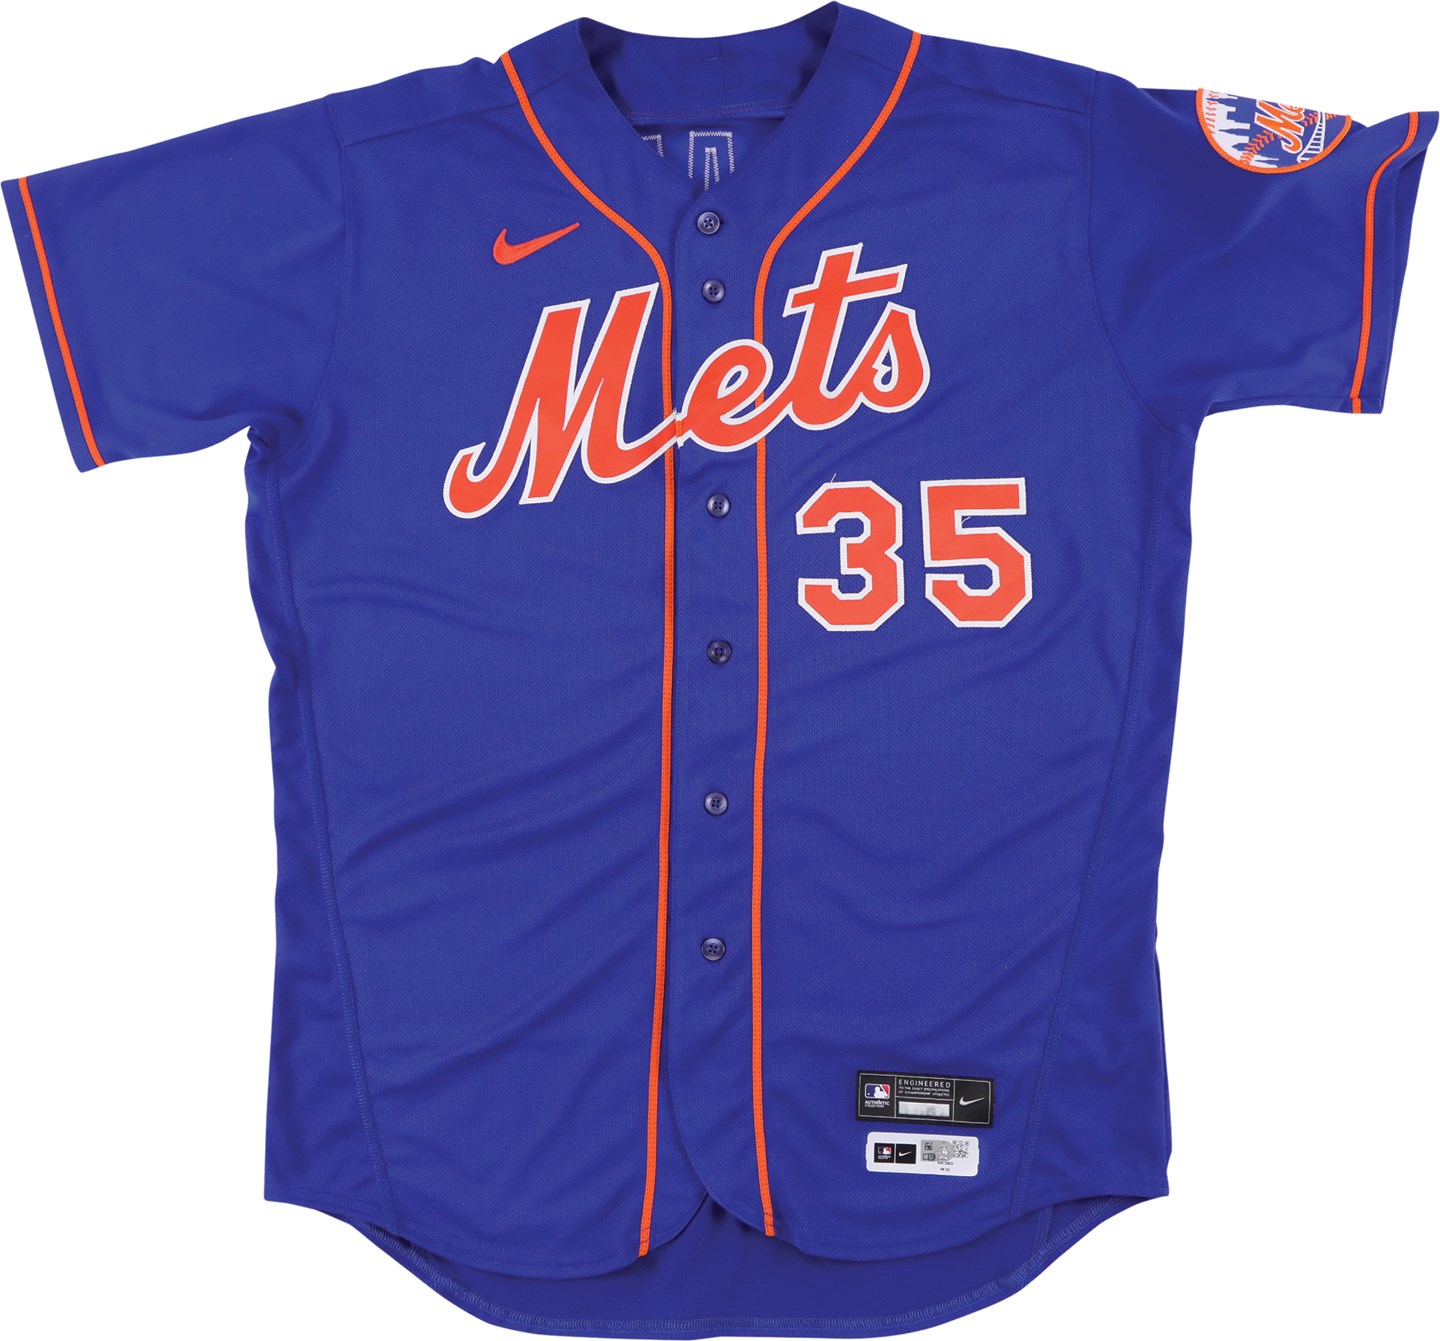 Baseball Equipment - March 15, 2023 Justin Verlander New York Mets Game Worn Jersey (Photo-Matched)